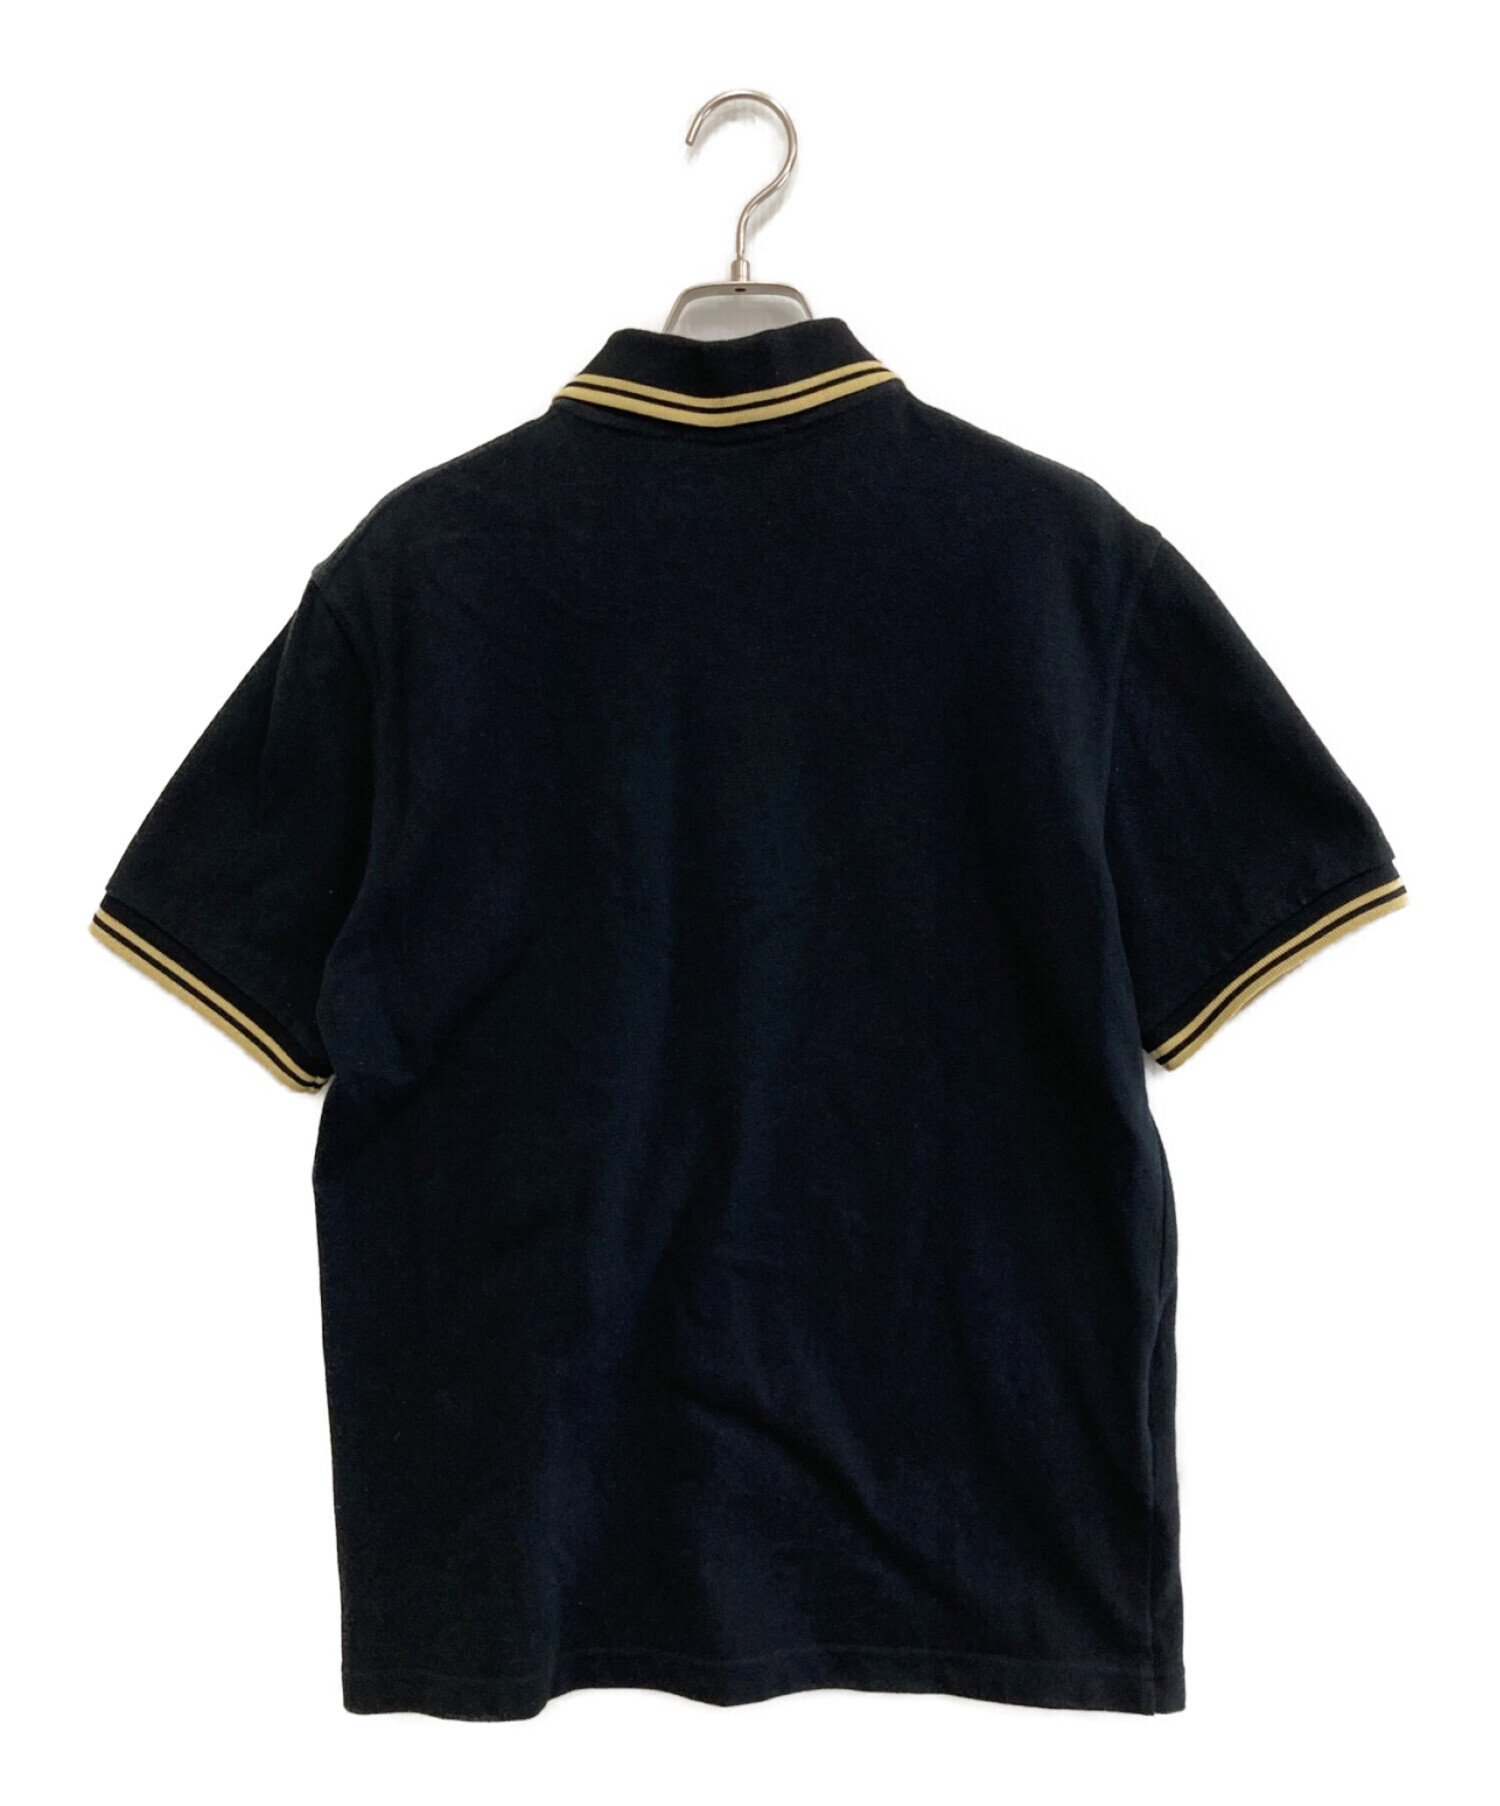 FRED PERRY (フレッドペリー) ポロシャツ ブラック×ゴールド サイズ:40